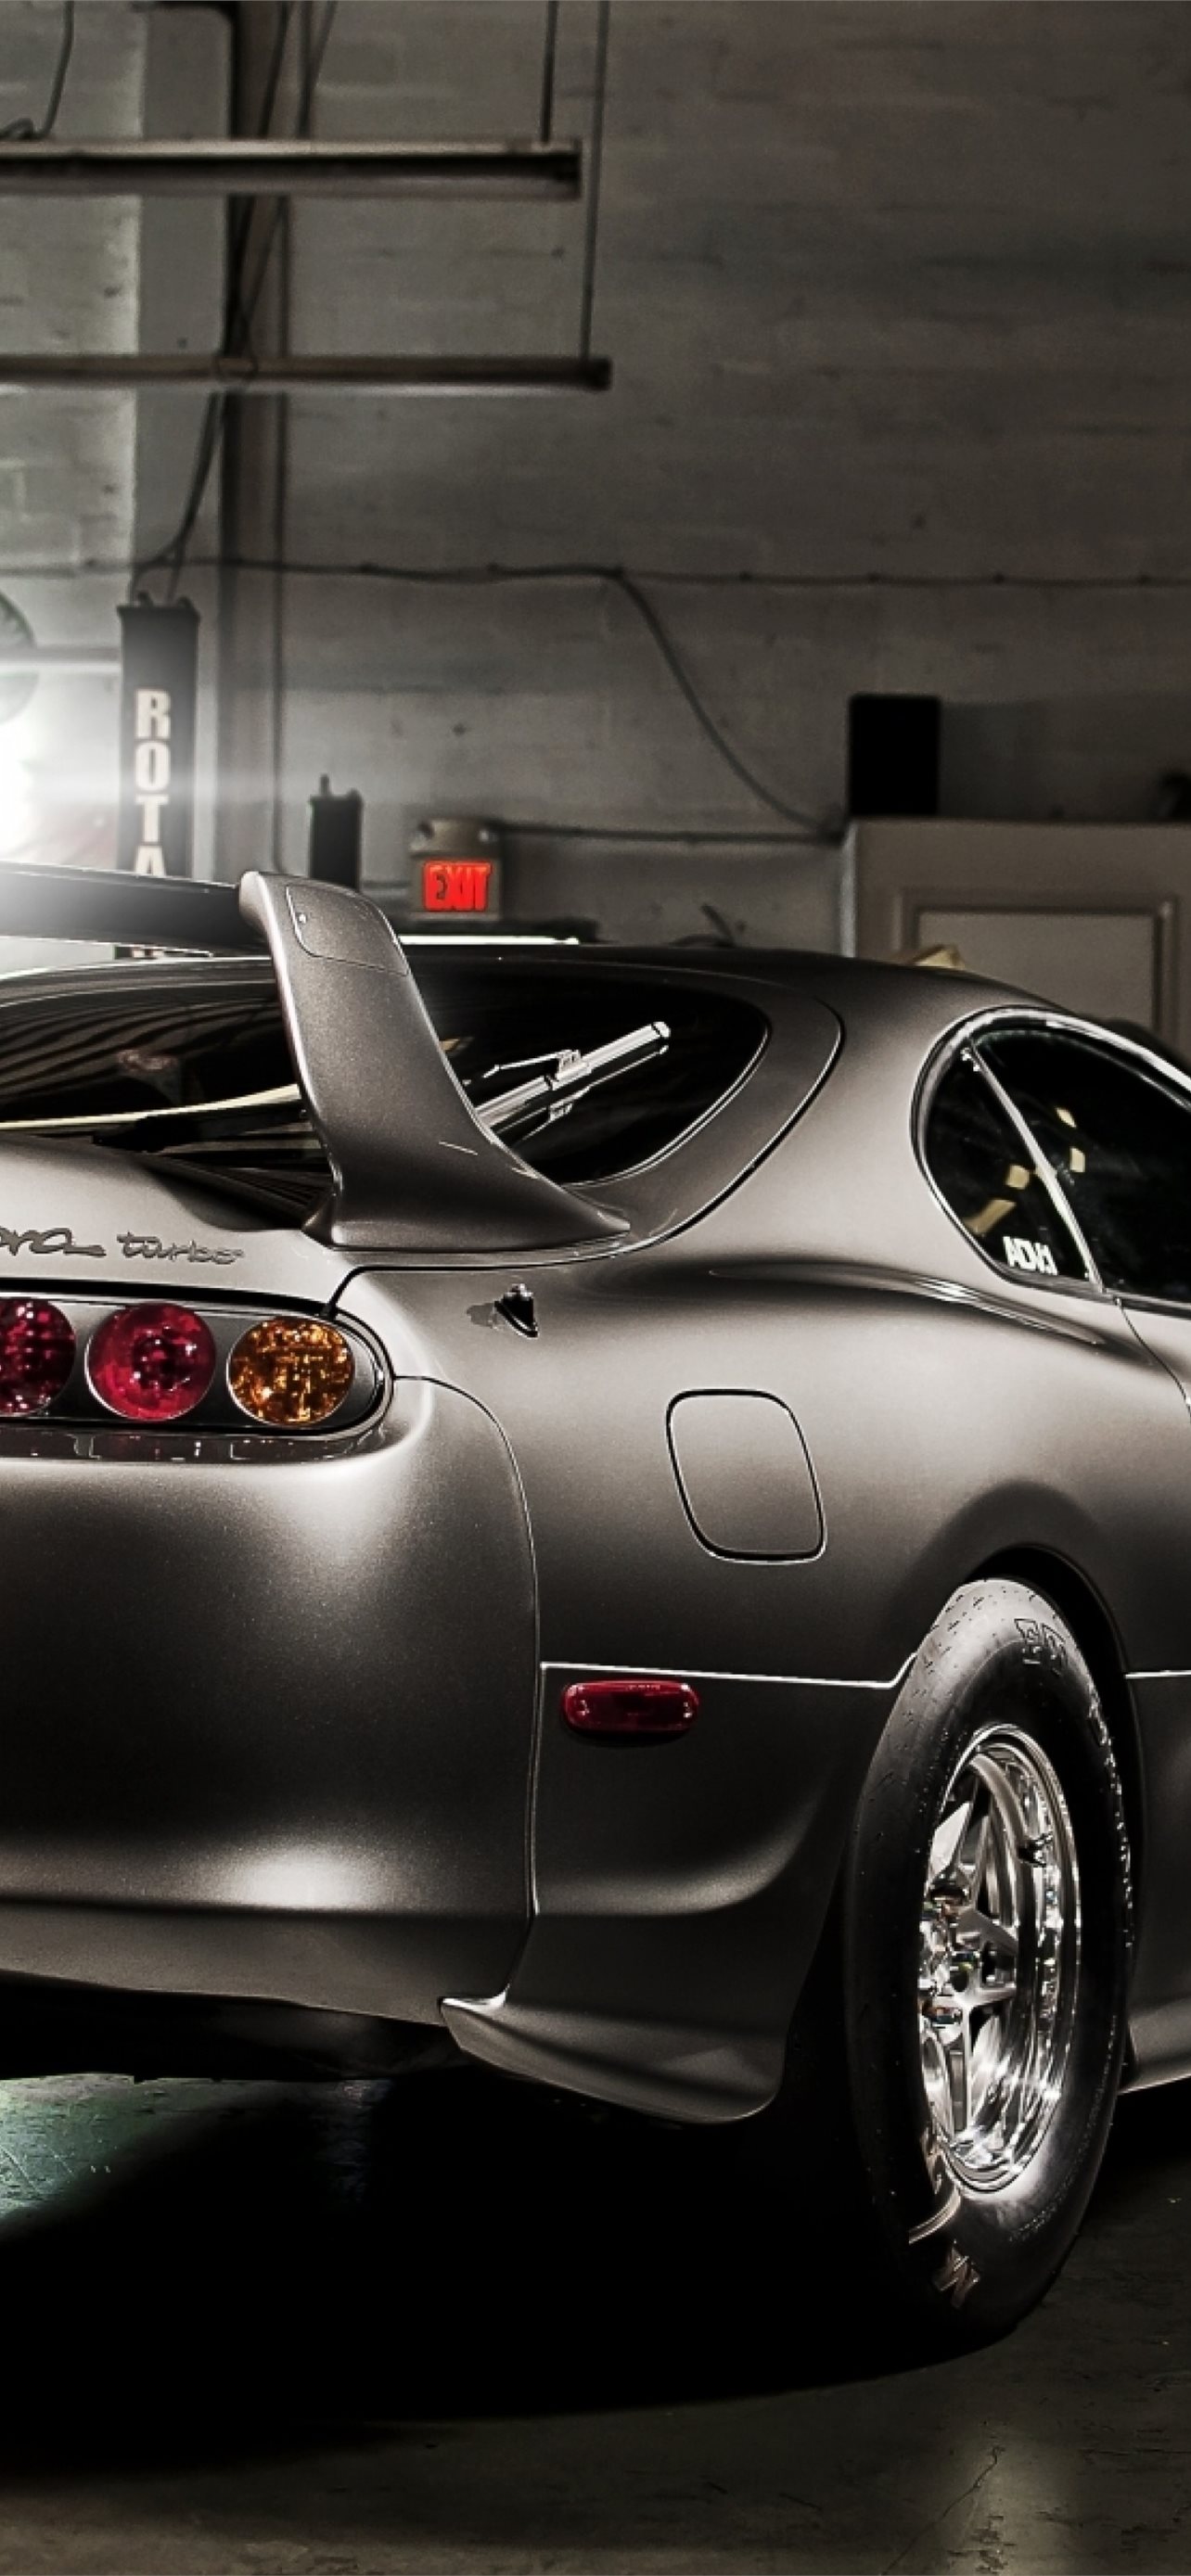 Toyota Supra Back View Spoiler Tuning Cars for Sam. iPhone Wallpaper Free Download